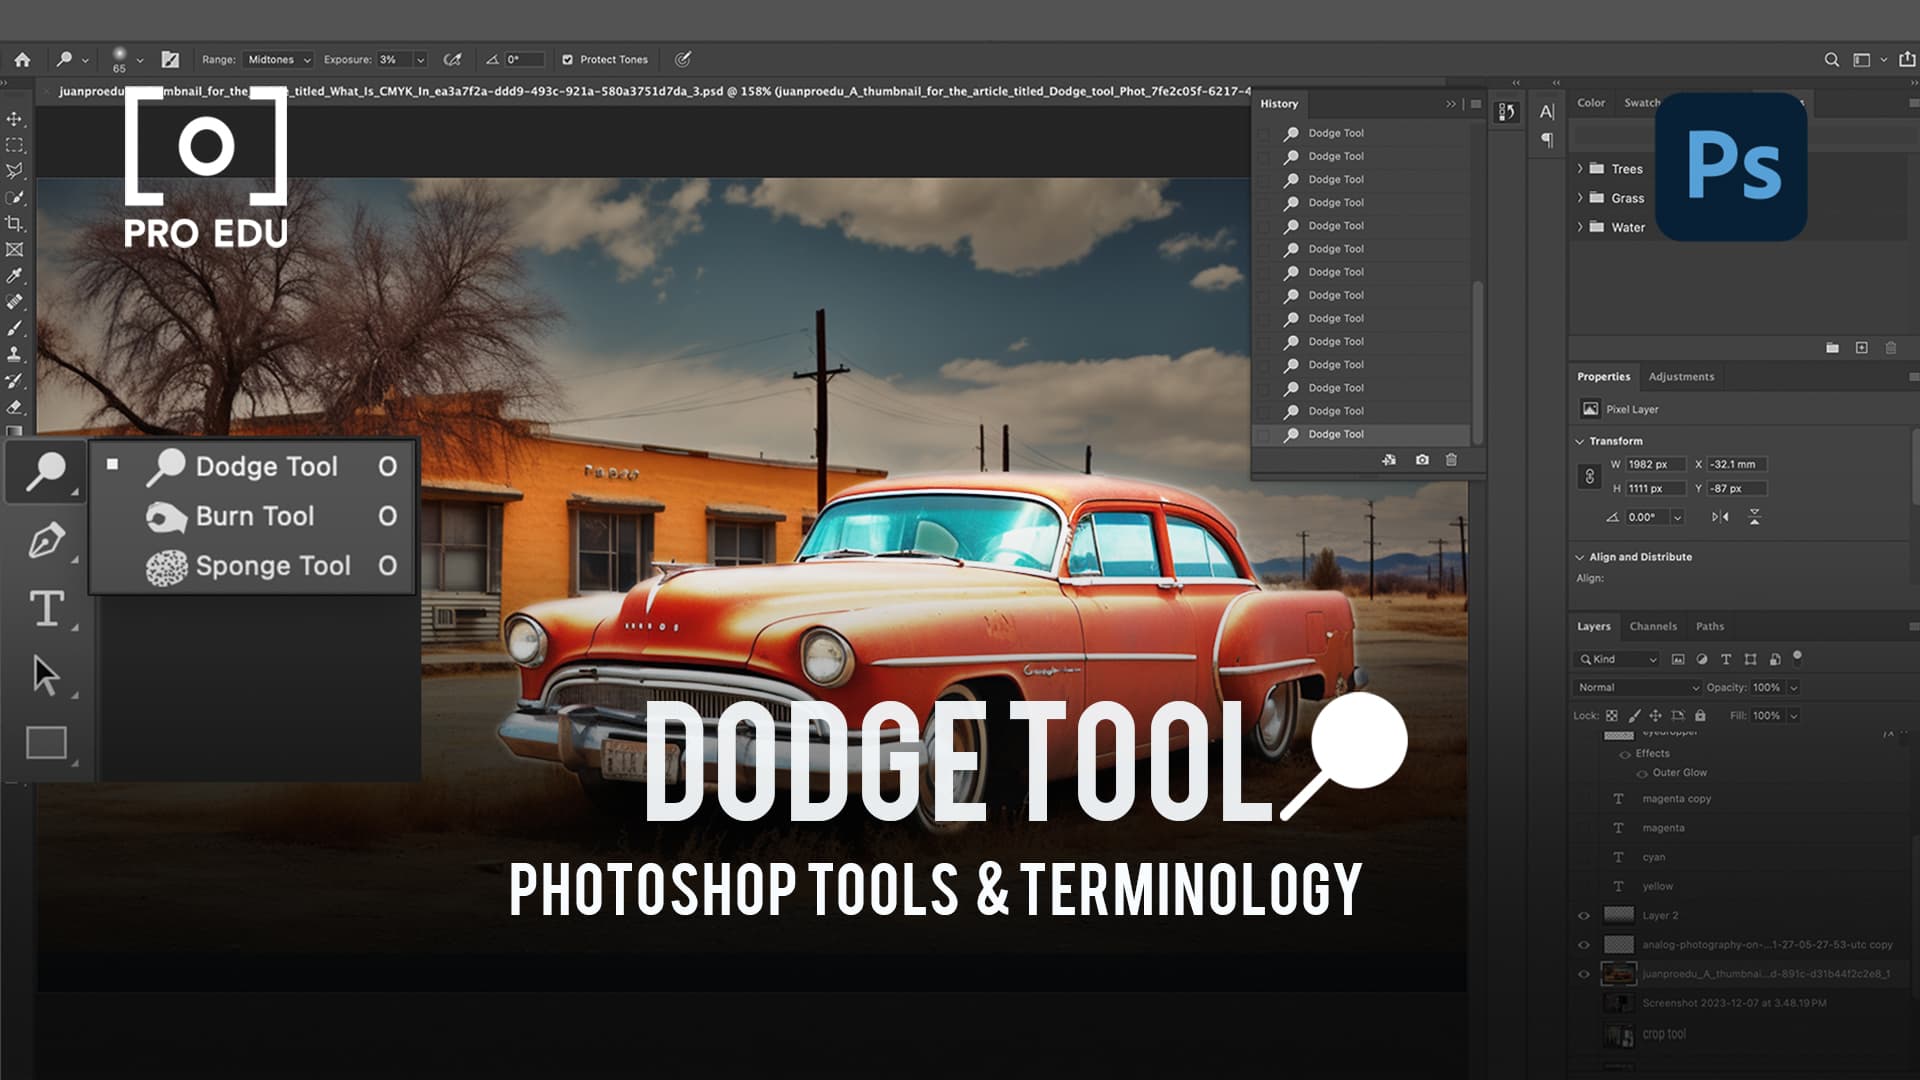 Dodge Tool Techniques in Photoshop - PRO EDU Tutorial